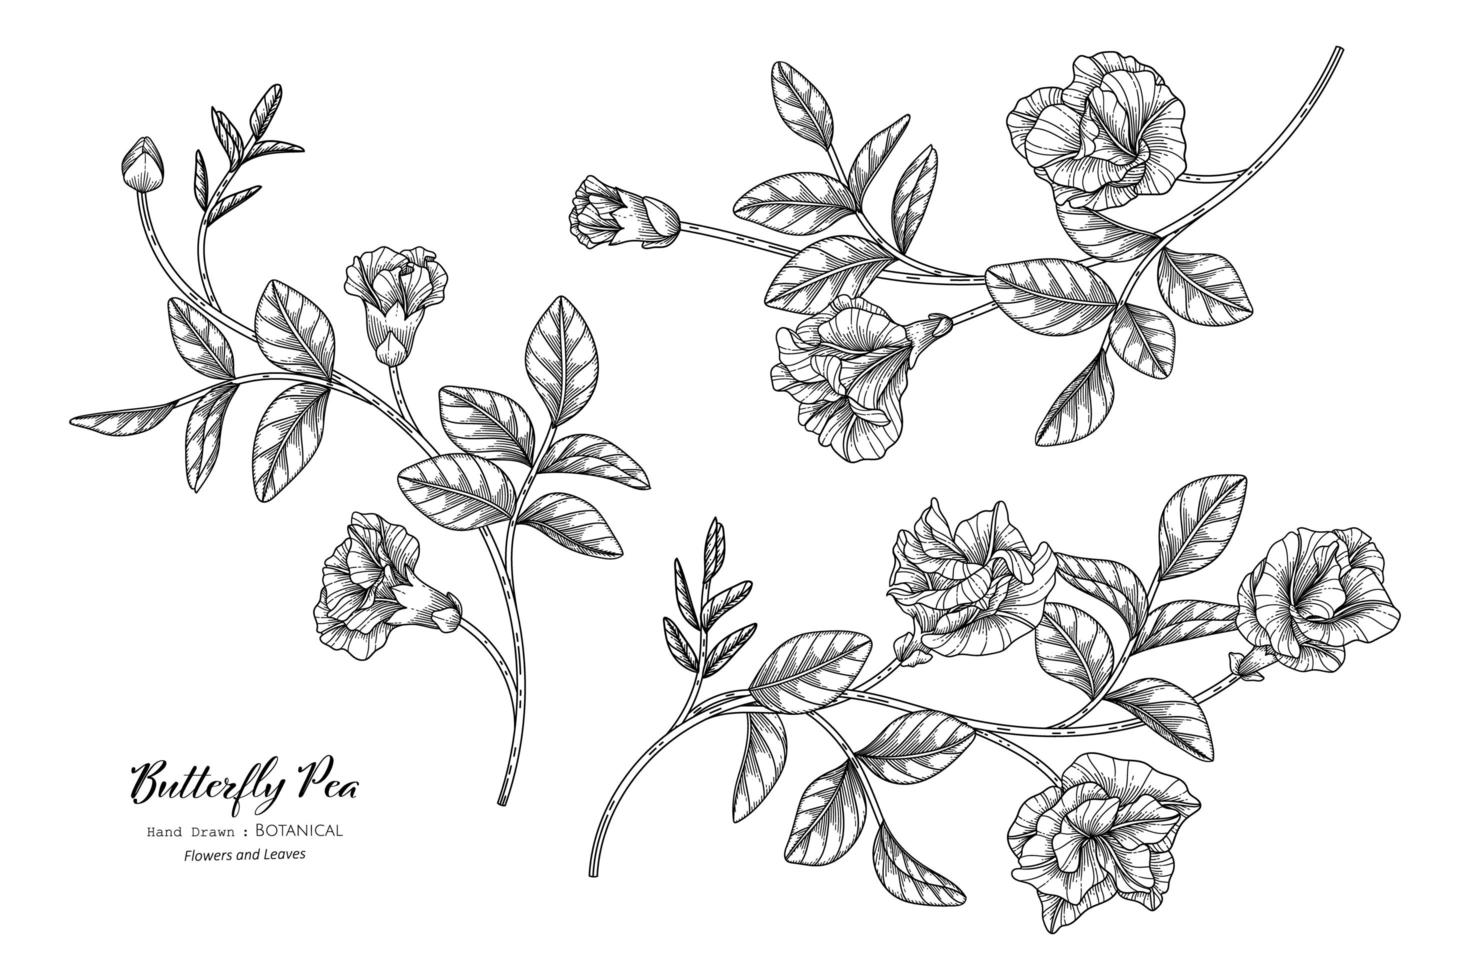 flor de guisantes de mariposa y hojas dibujadas a mano ilustración botánica con arte lineal vector